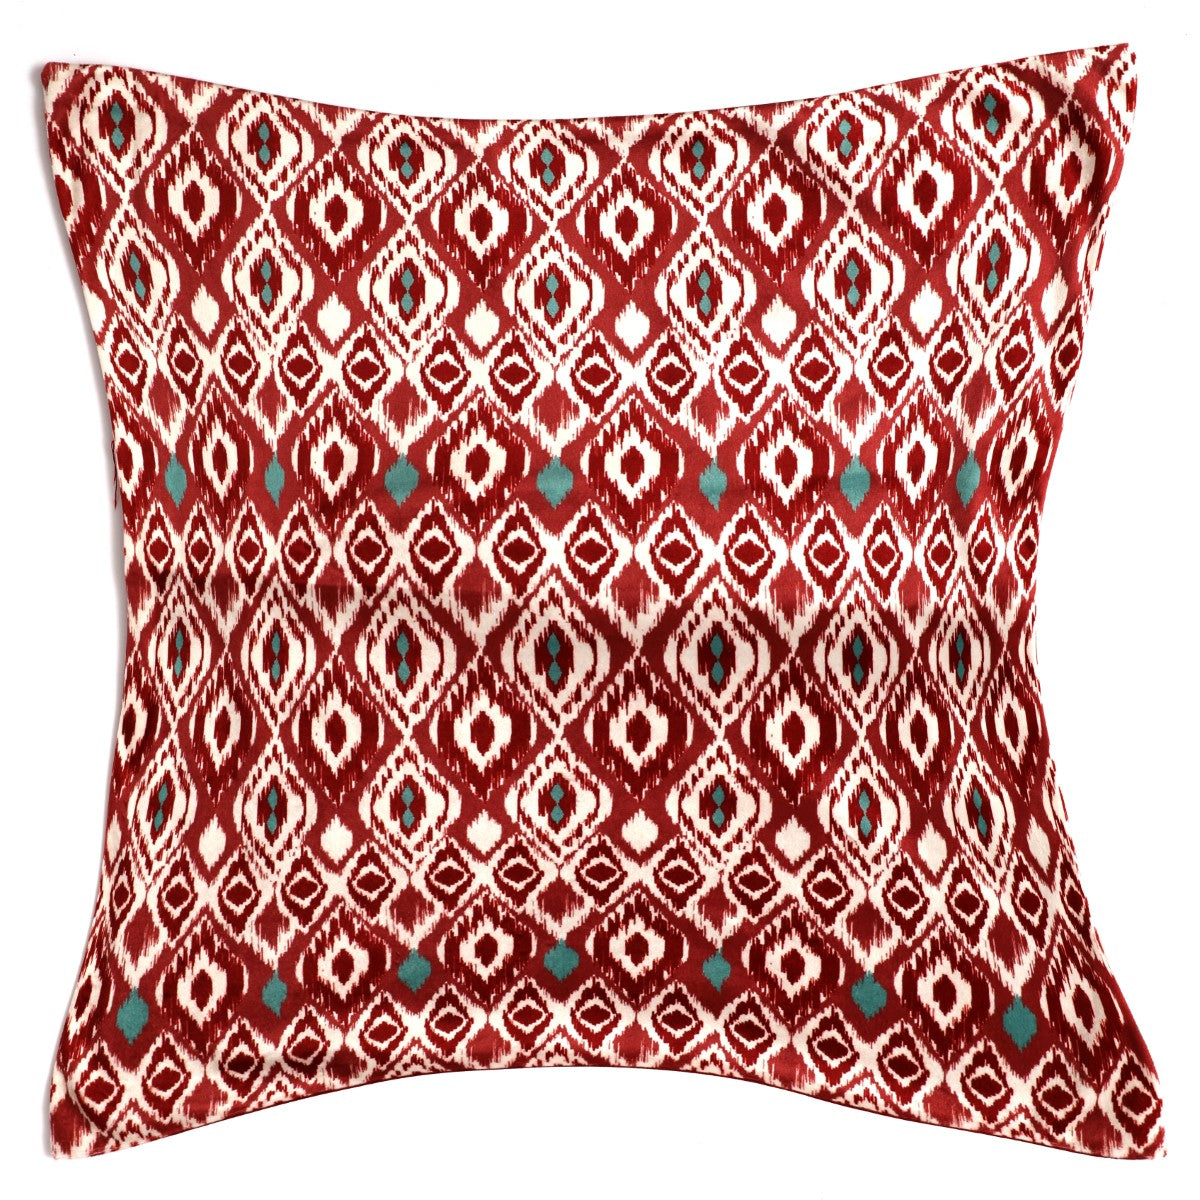 Aztec Terracotta Cushion Cover 18x18"